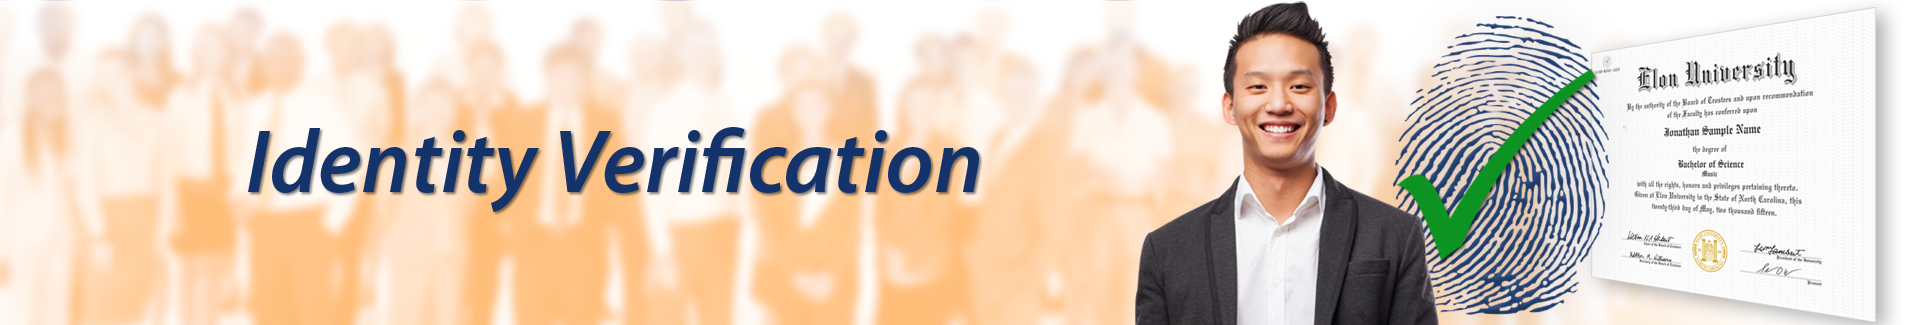 Solutions - Identity Verification logo background